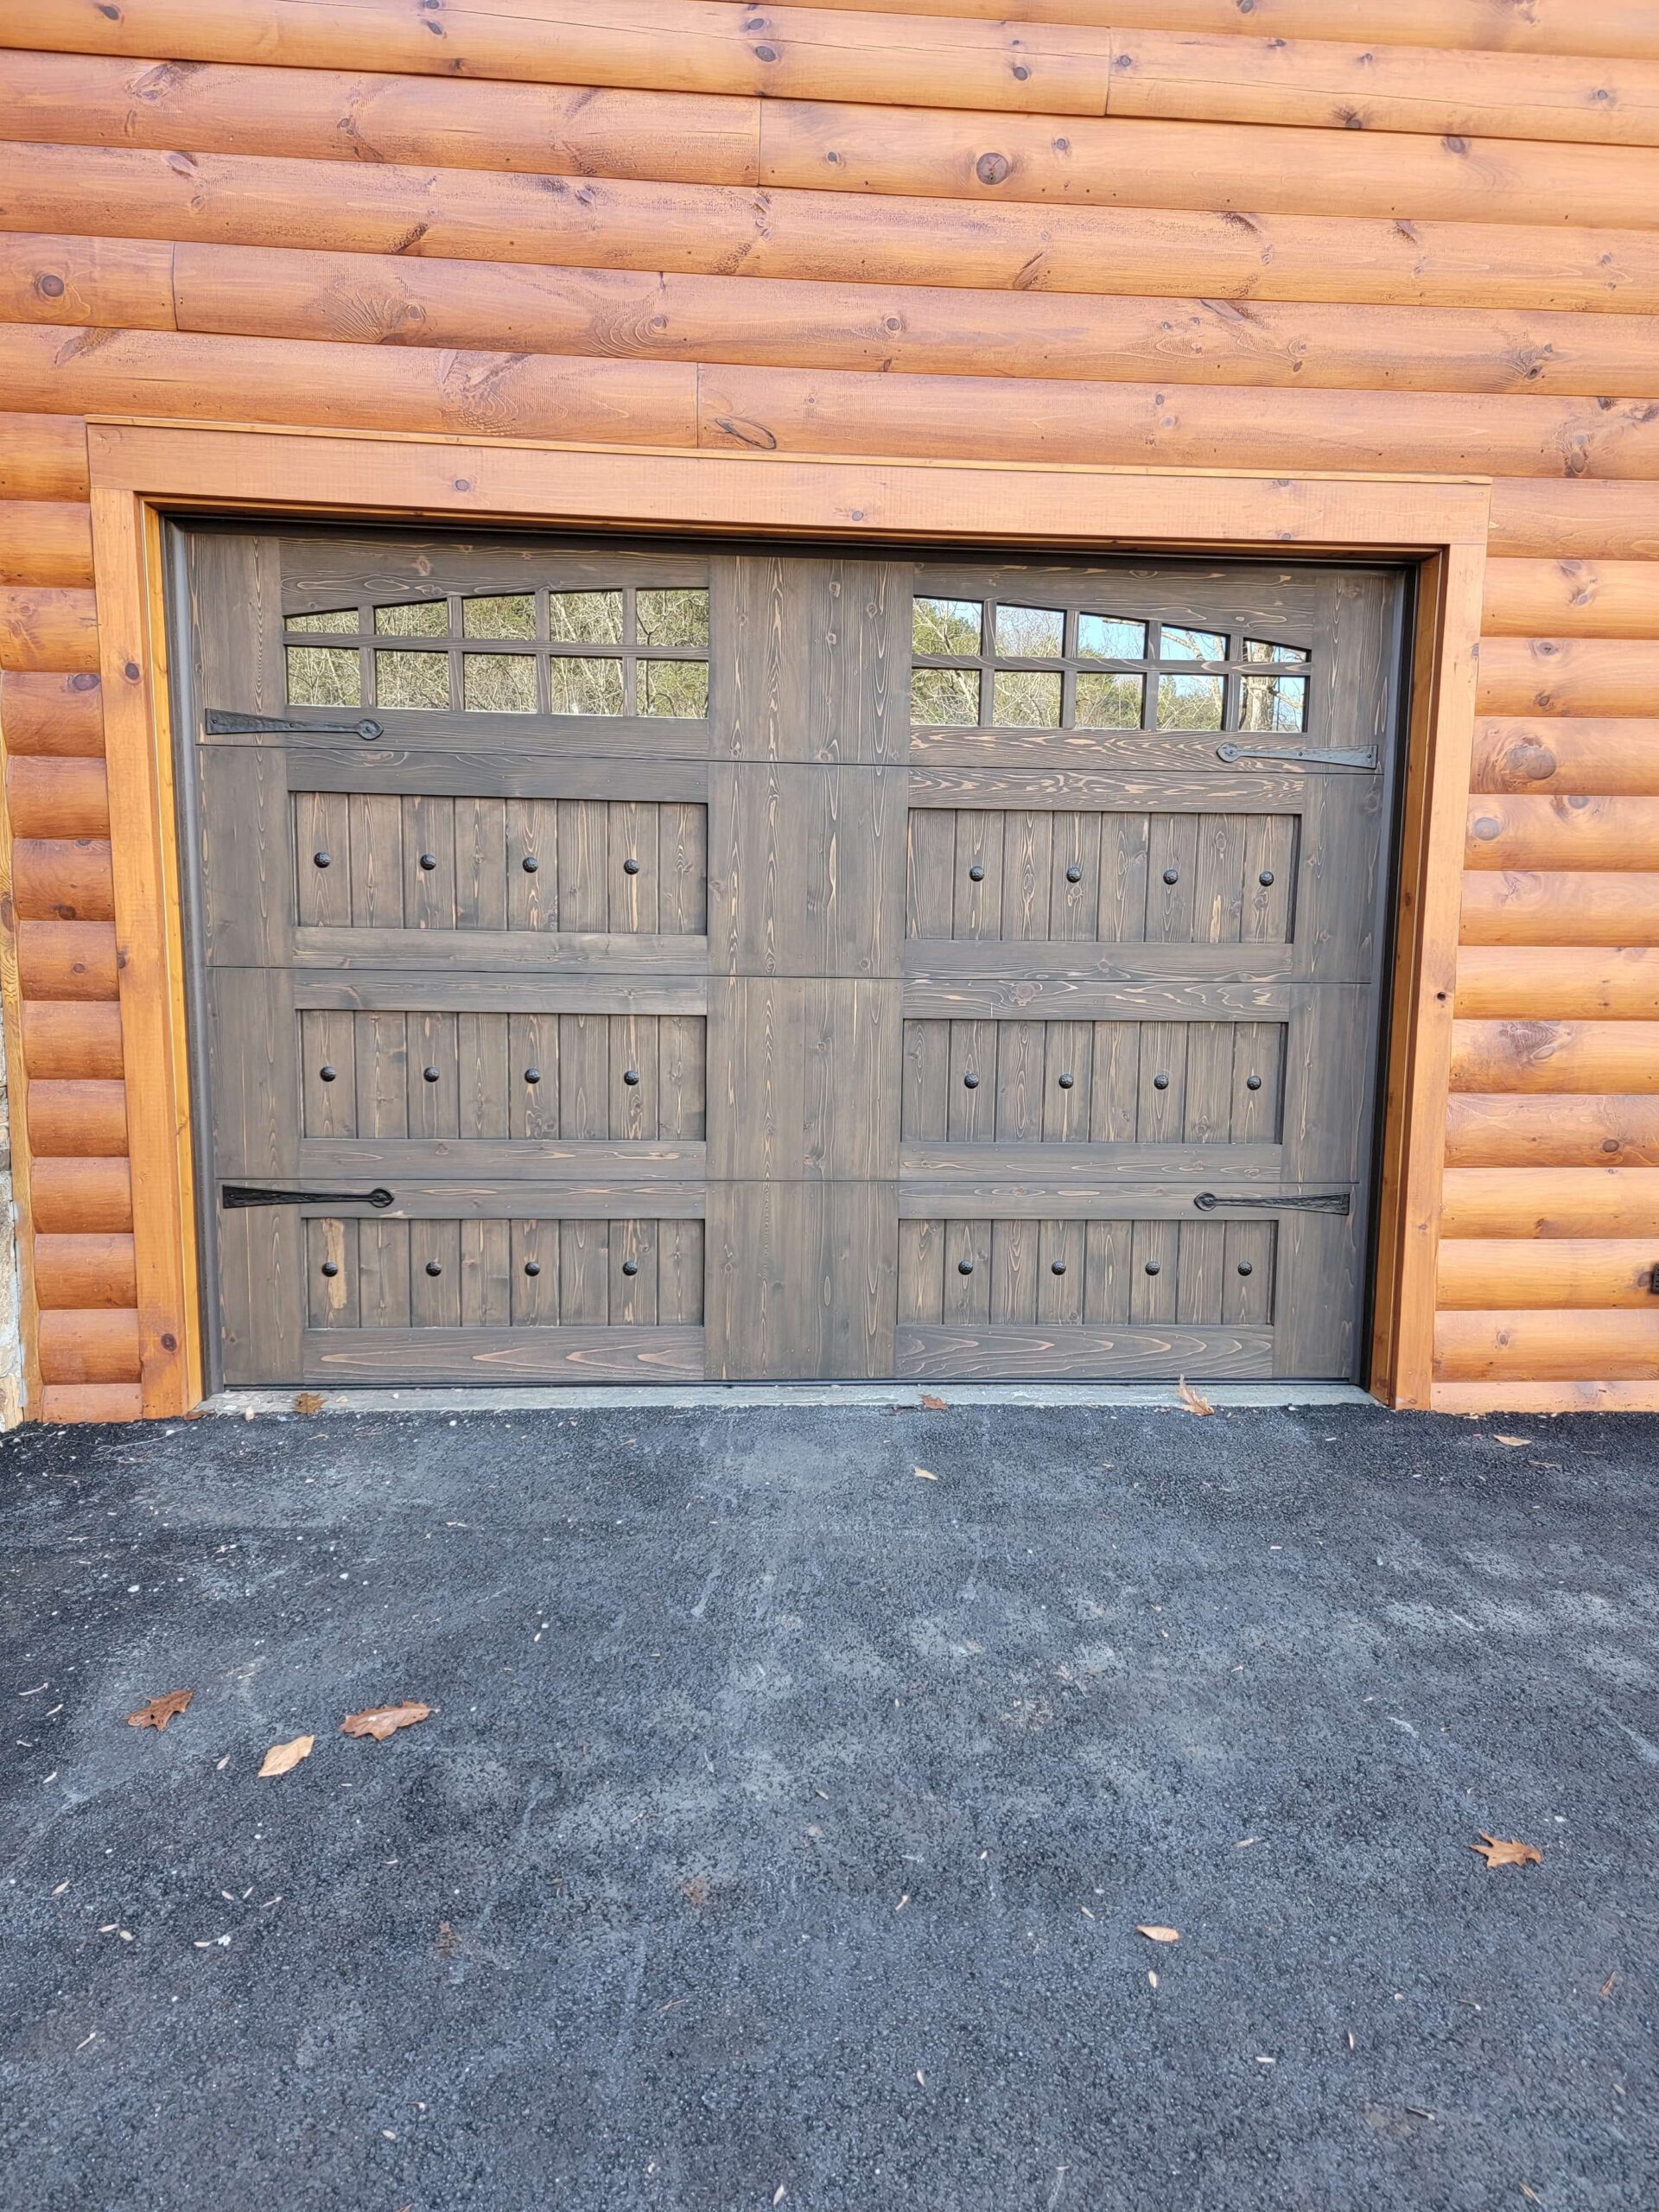 stained wood garage door with windows